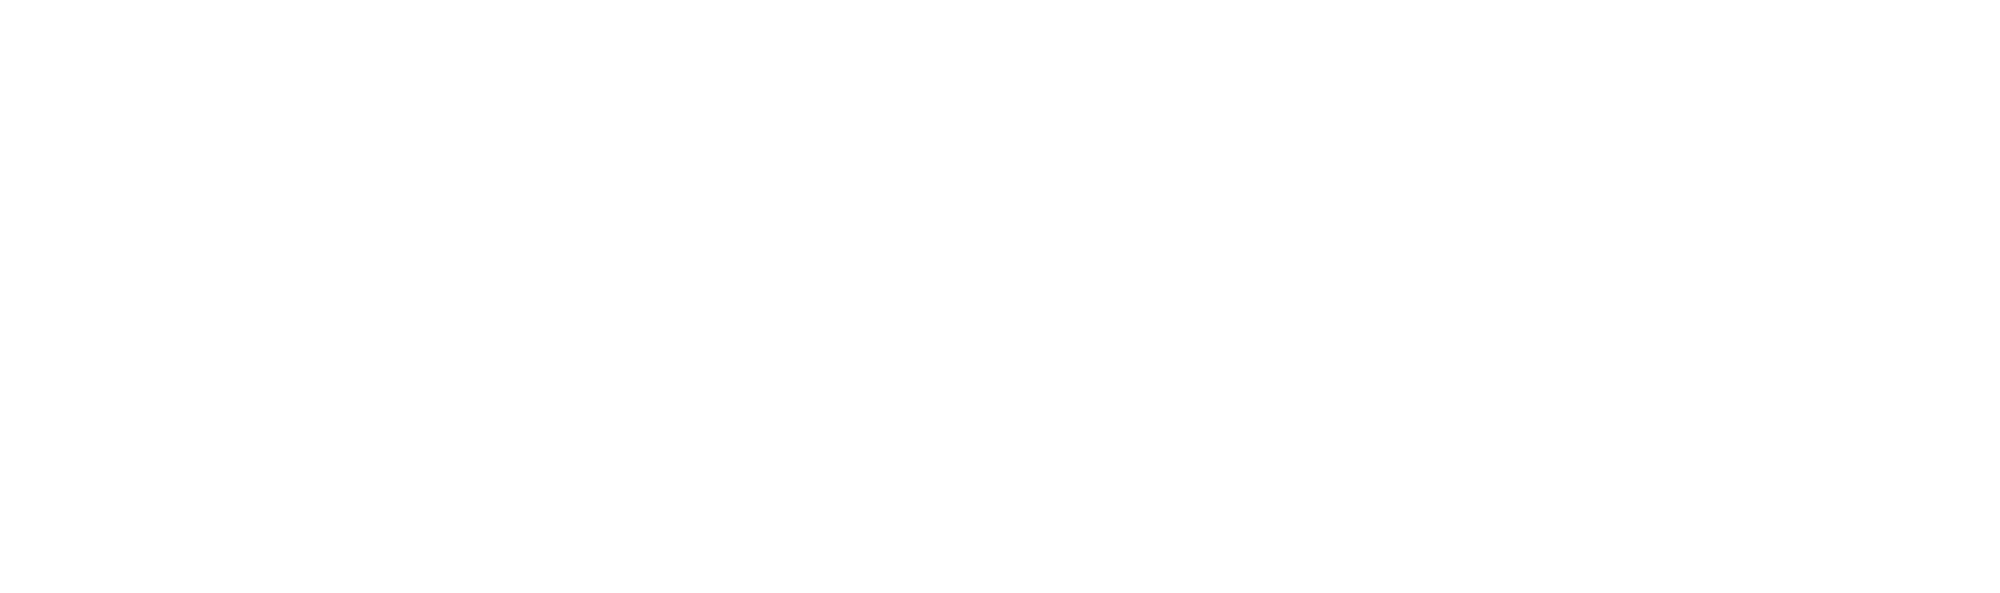 logo_cdn-controls-ltd_logo-only-all-white-01